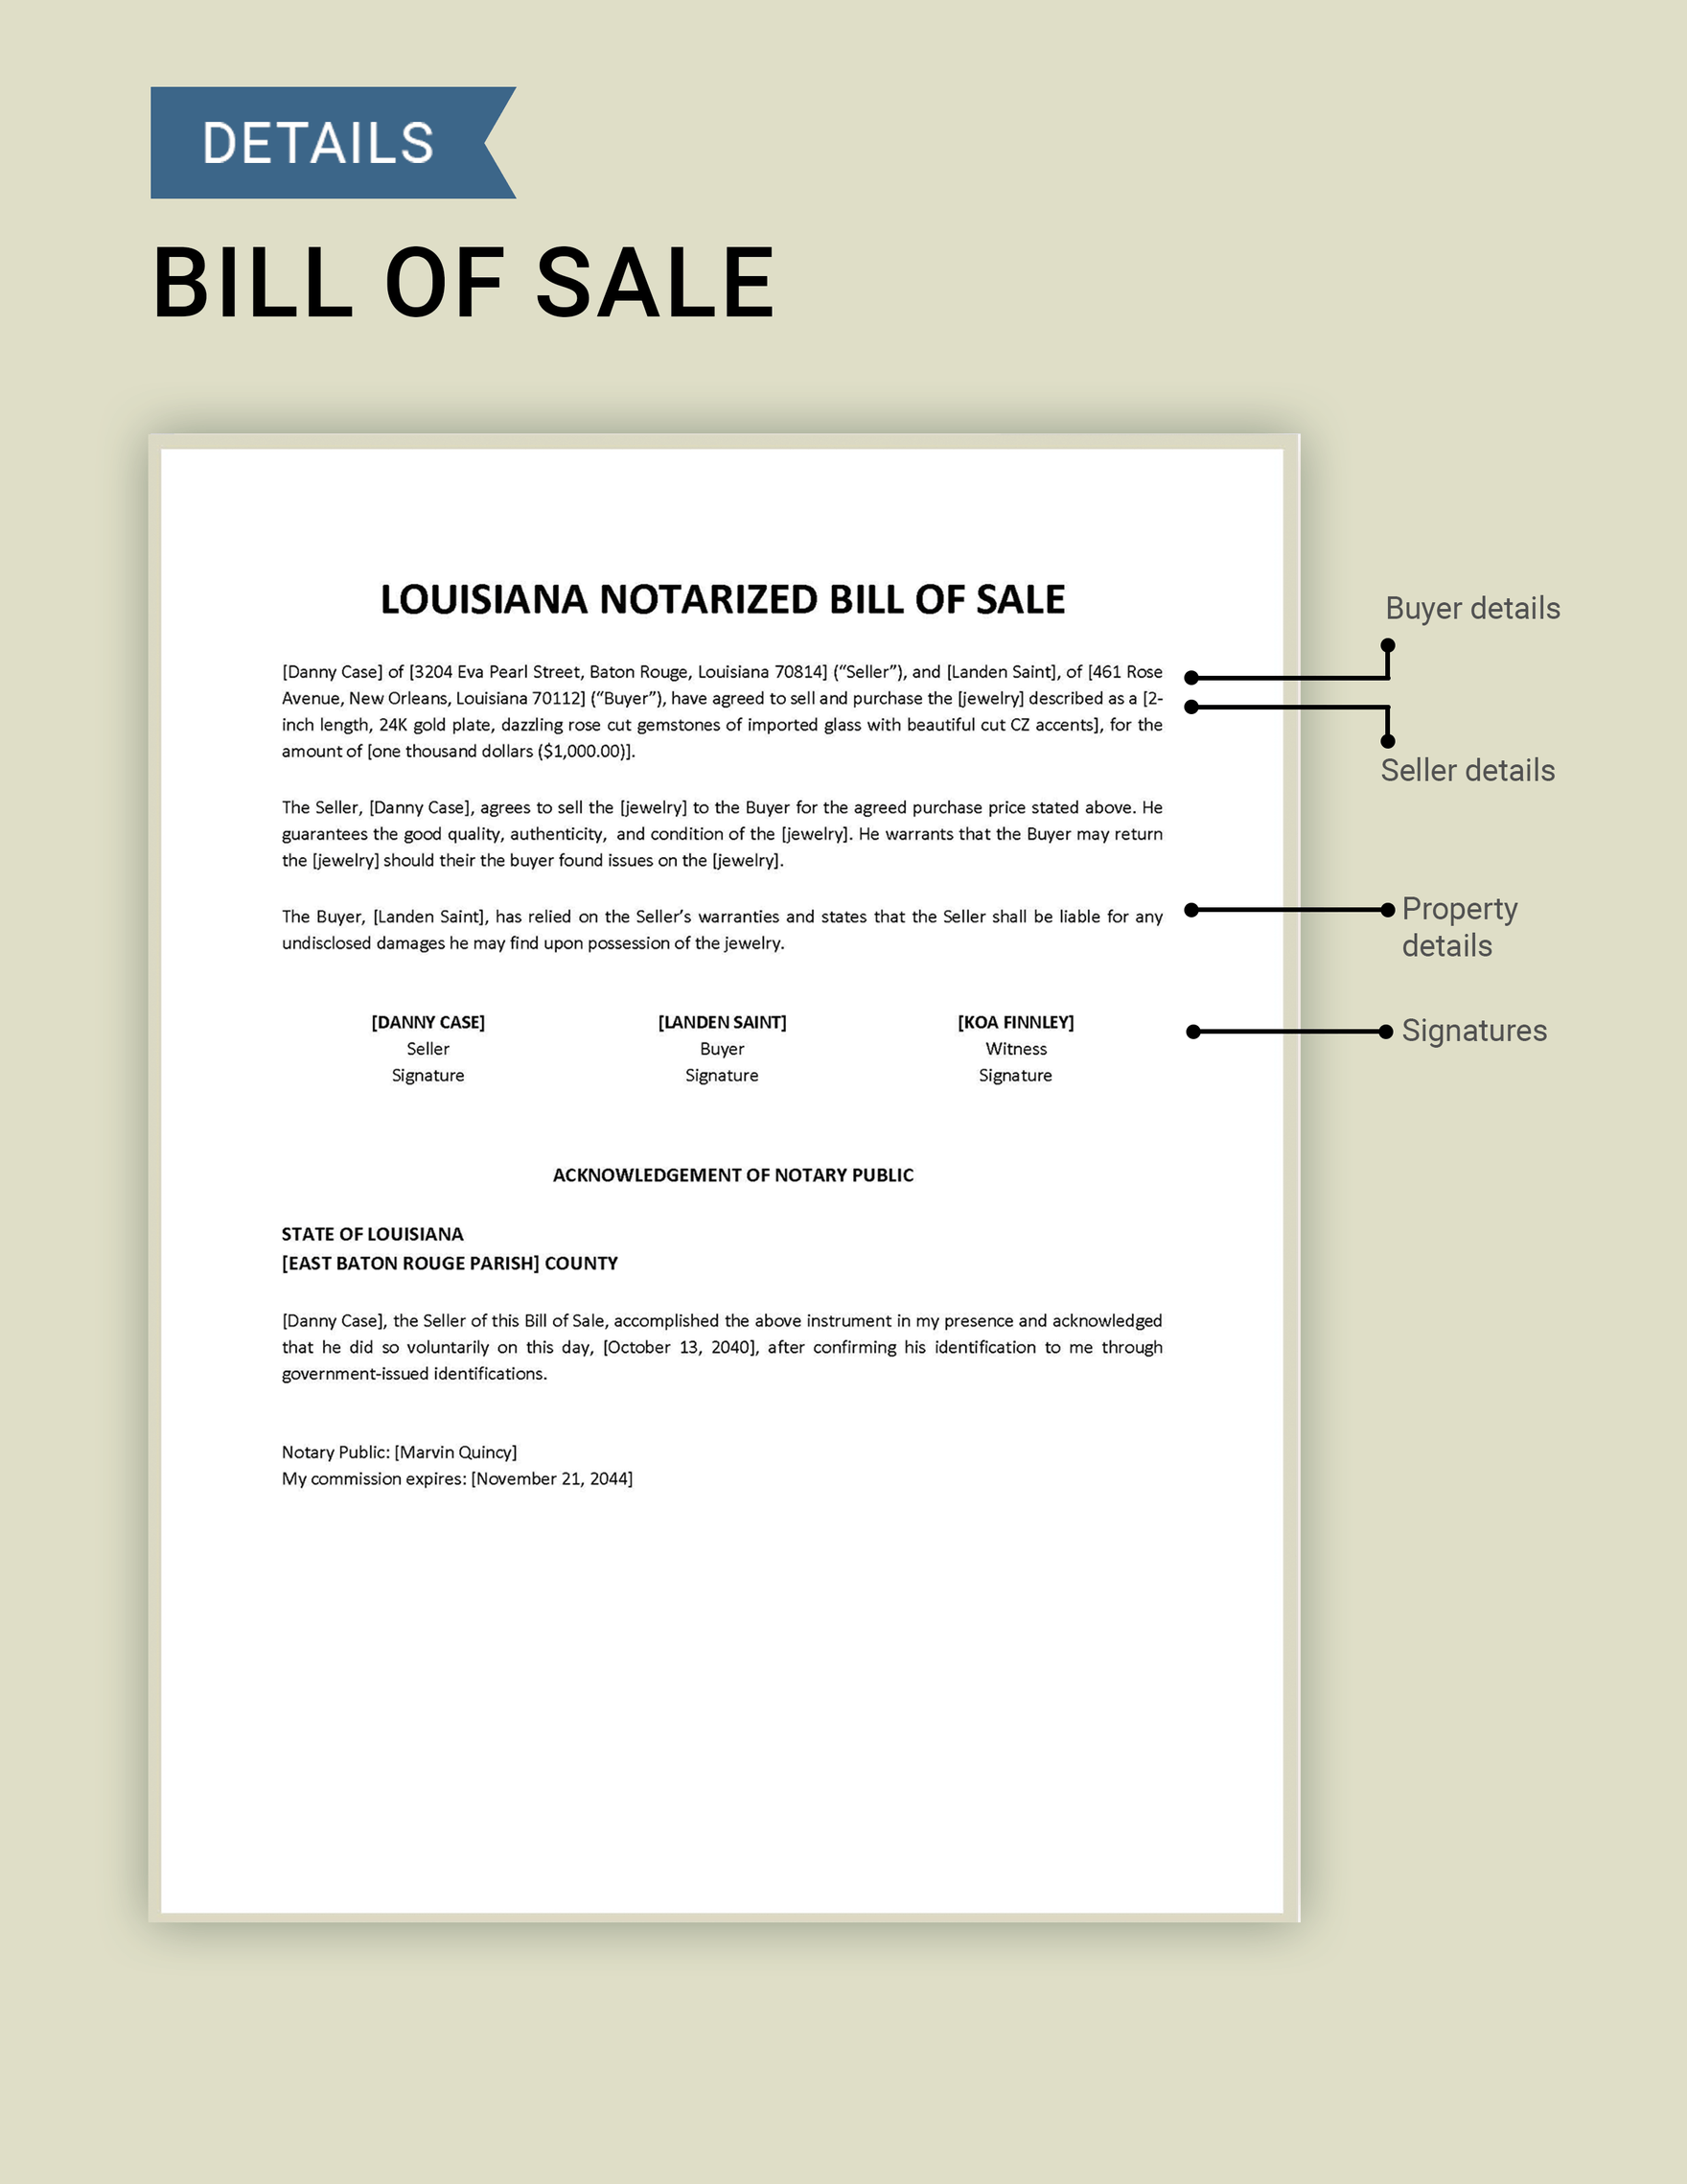 Louisiana Notarized Bill of Sale Template